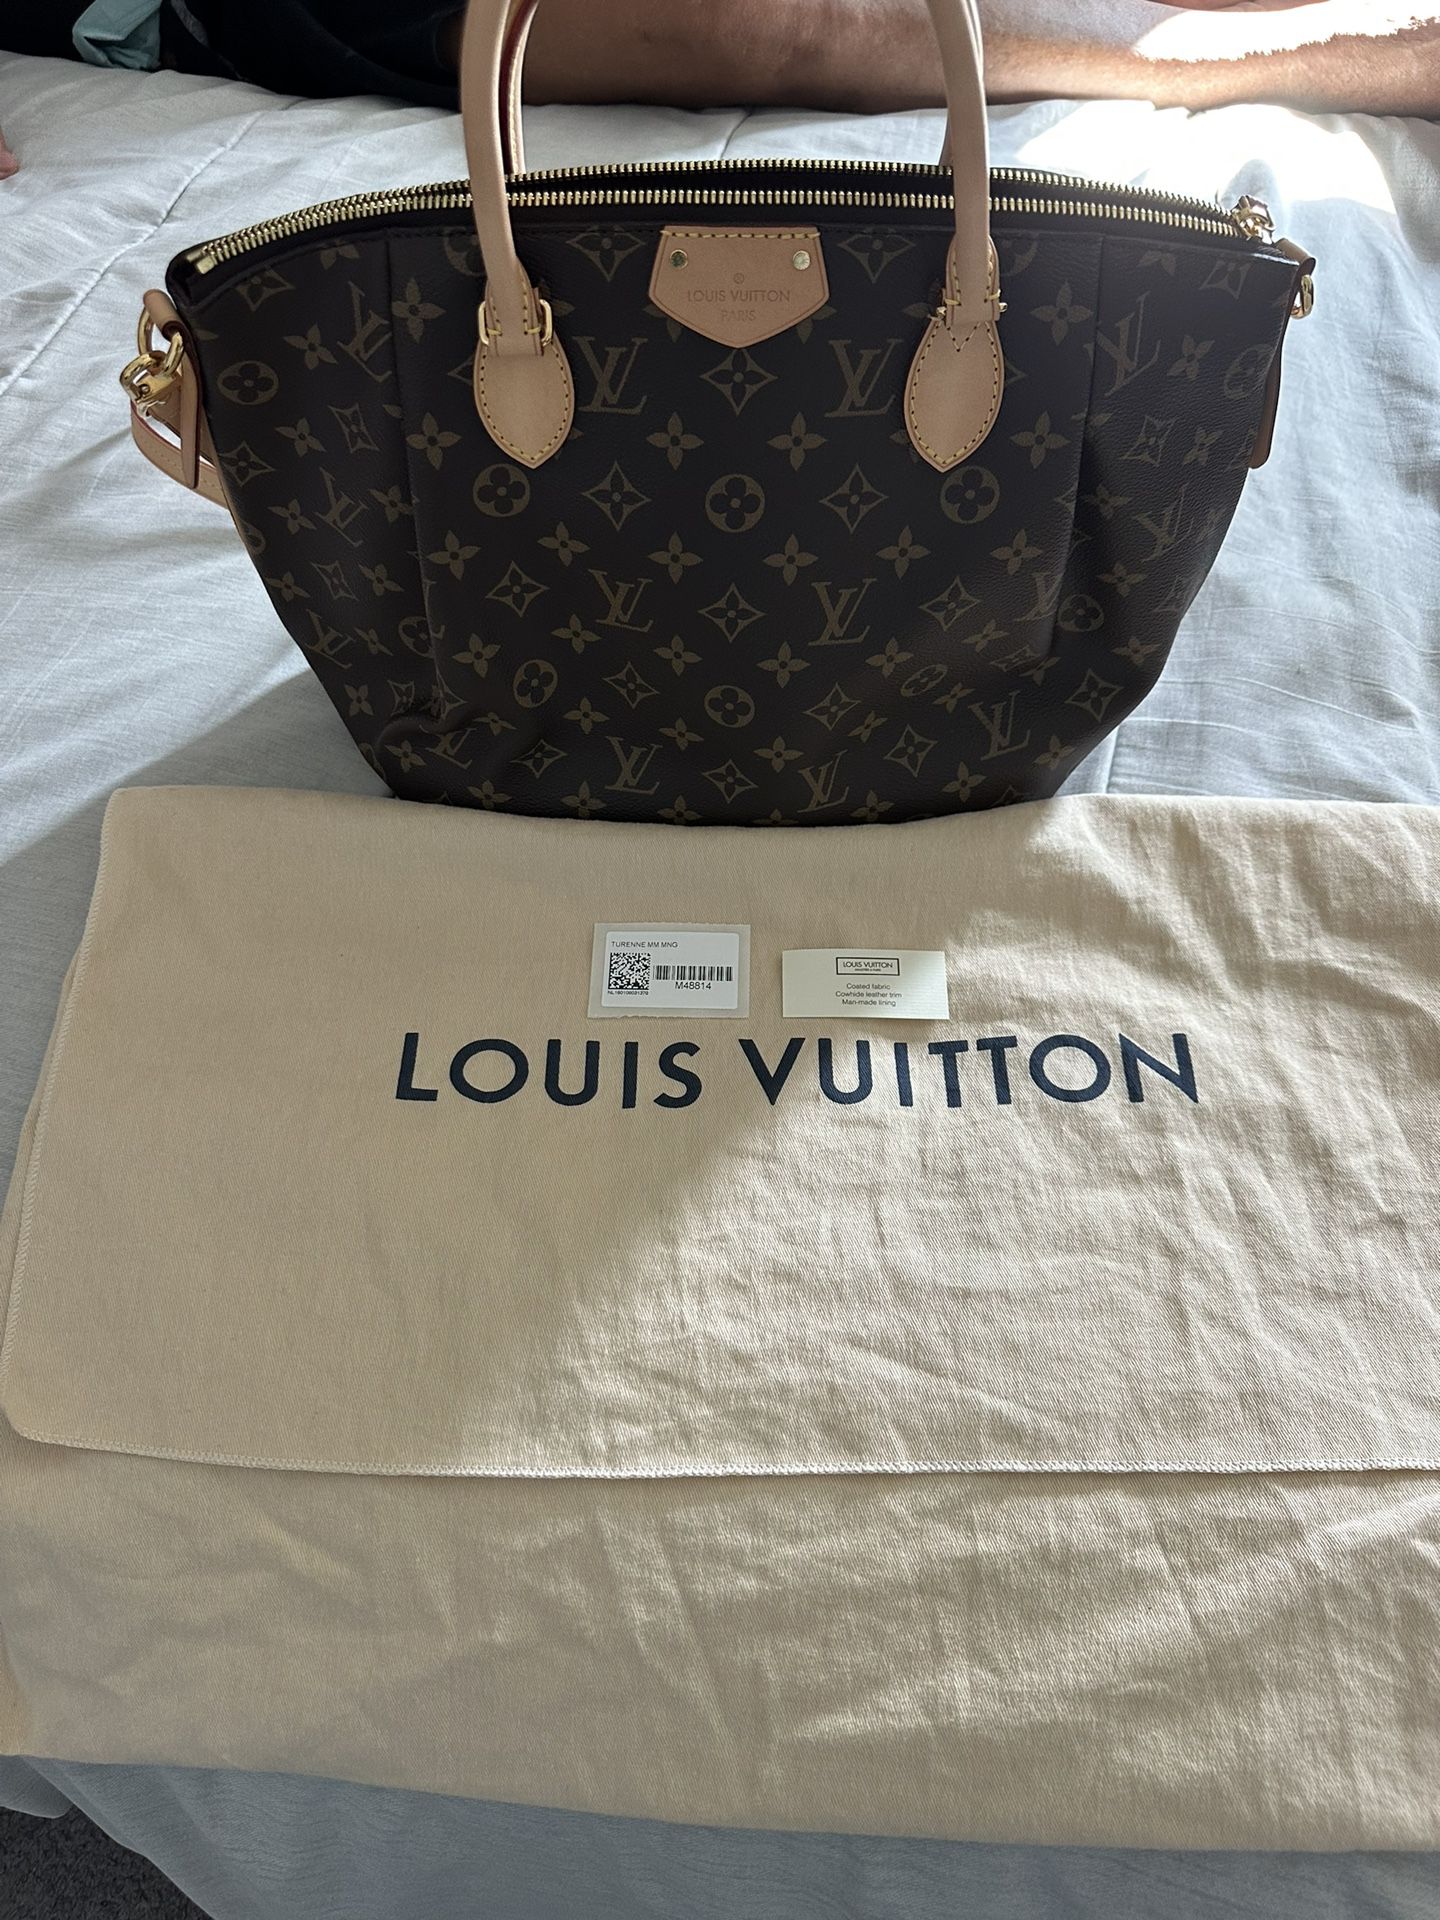 Louis Vuitton Turenne MM for Sale in Las Vegas, NV - OfferUp